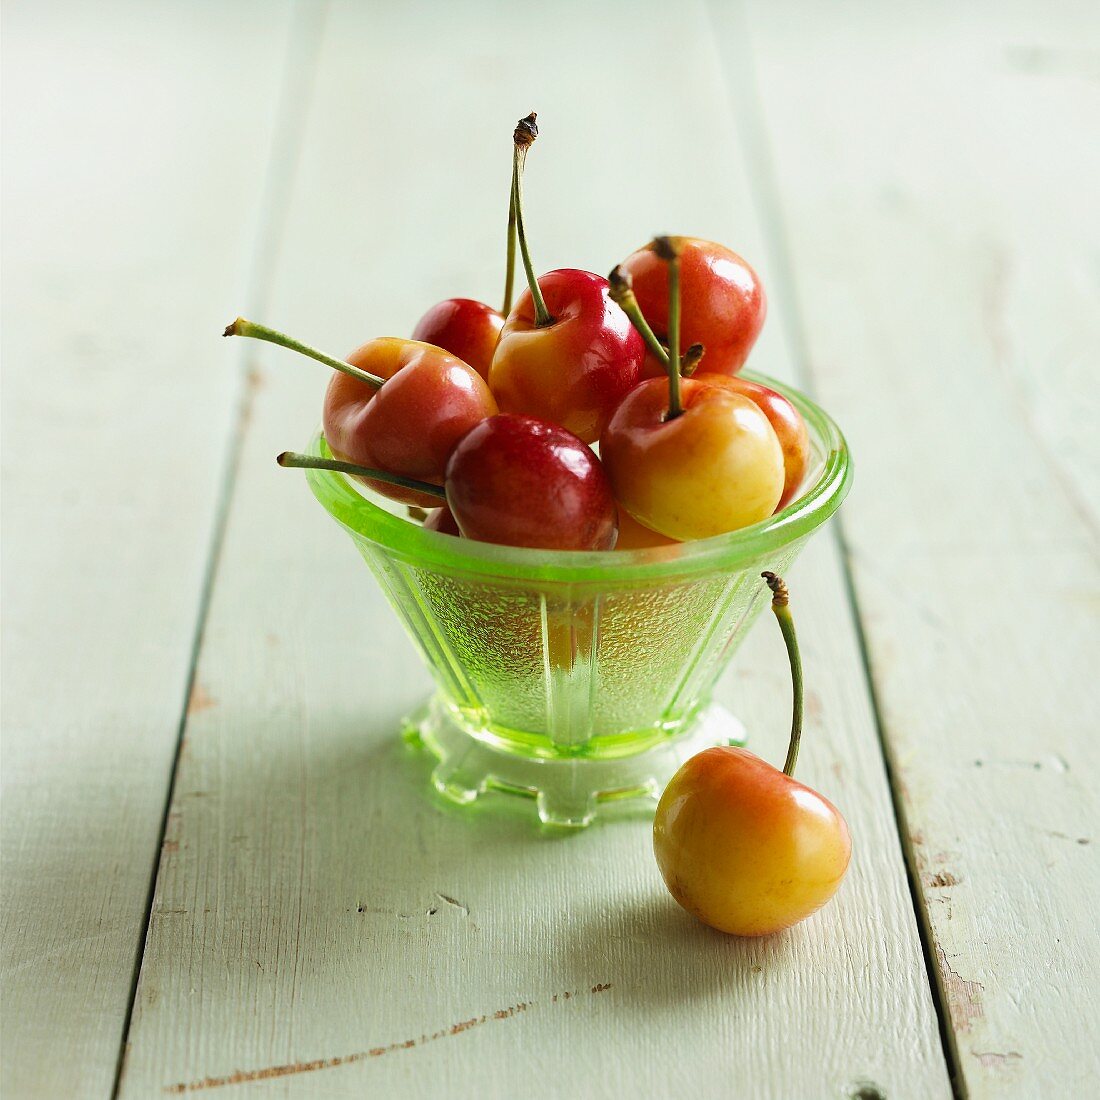 Fresh sweet cherries in a glass bowl